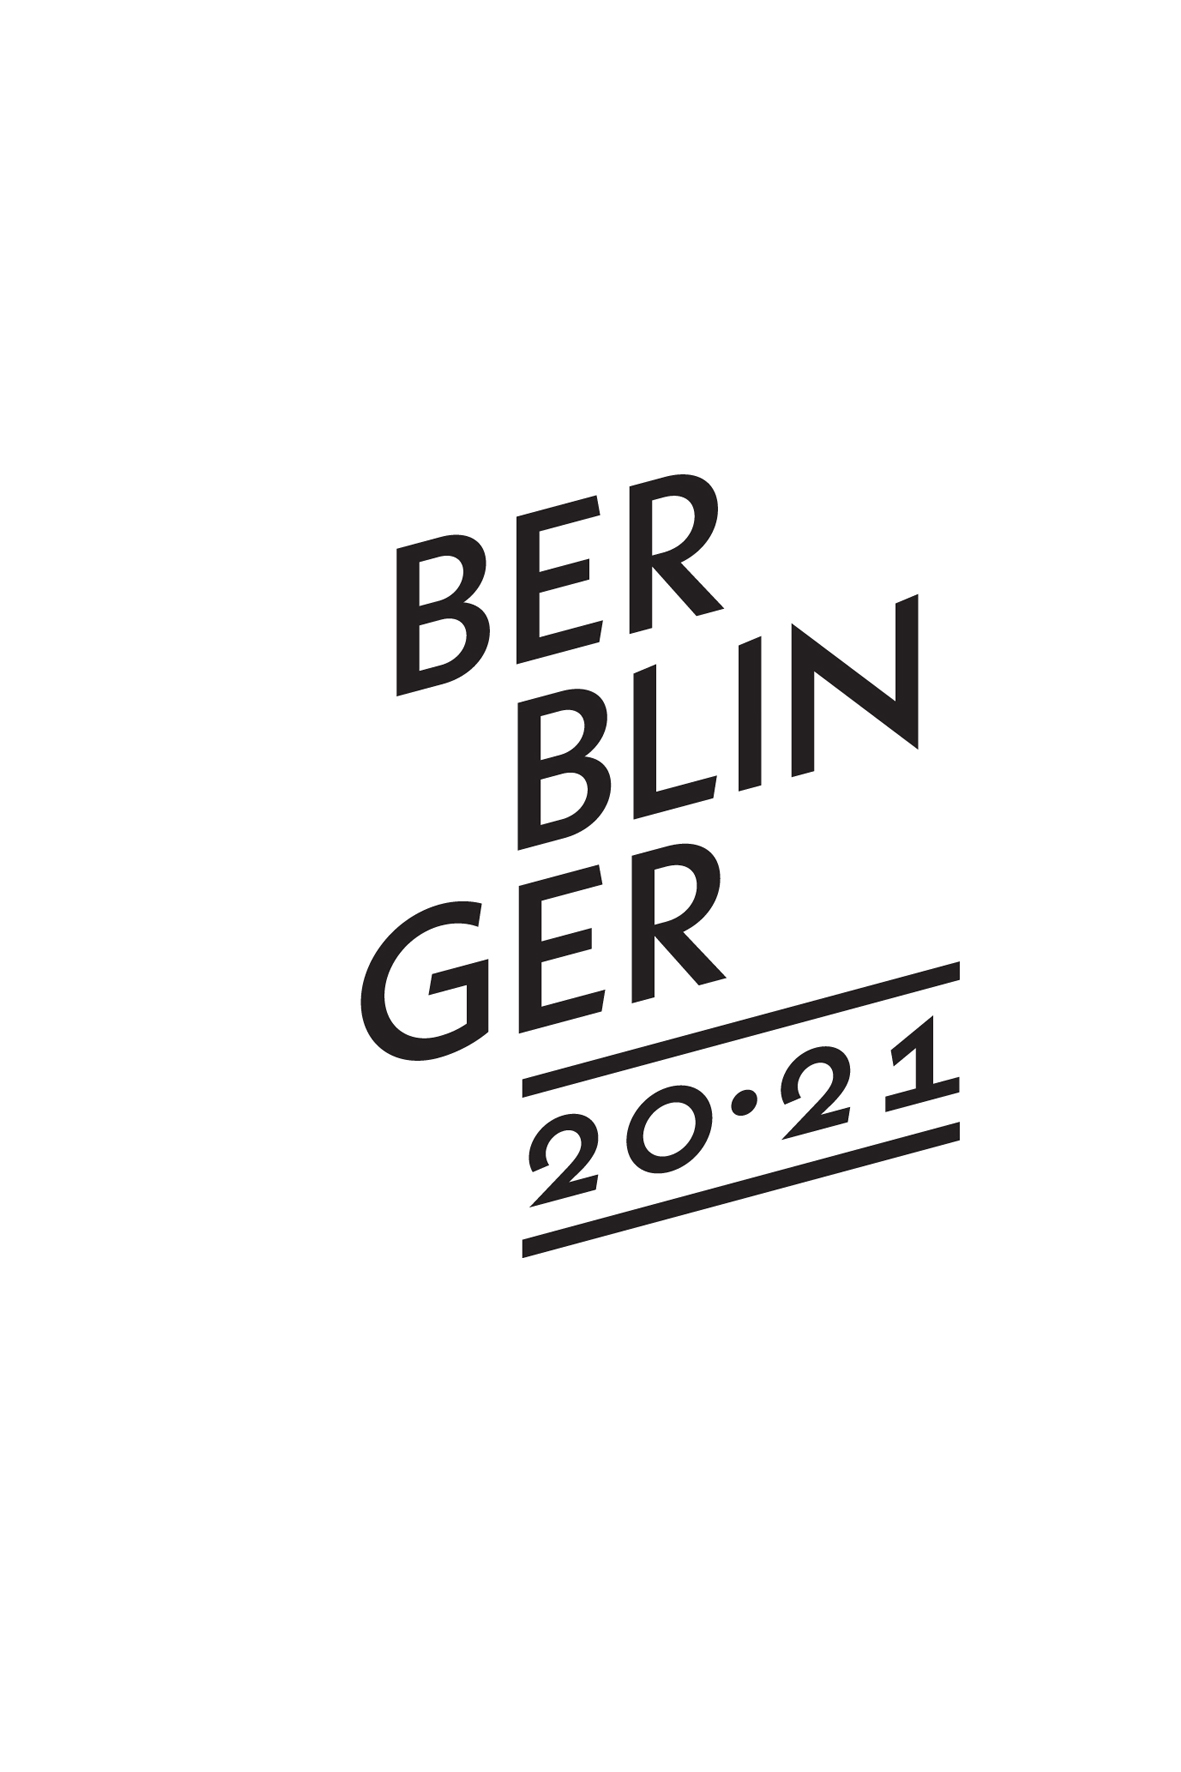 Zeigt das Logo des Berblingerjubiläums 2021